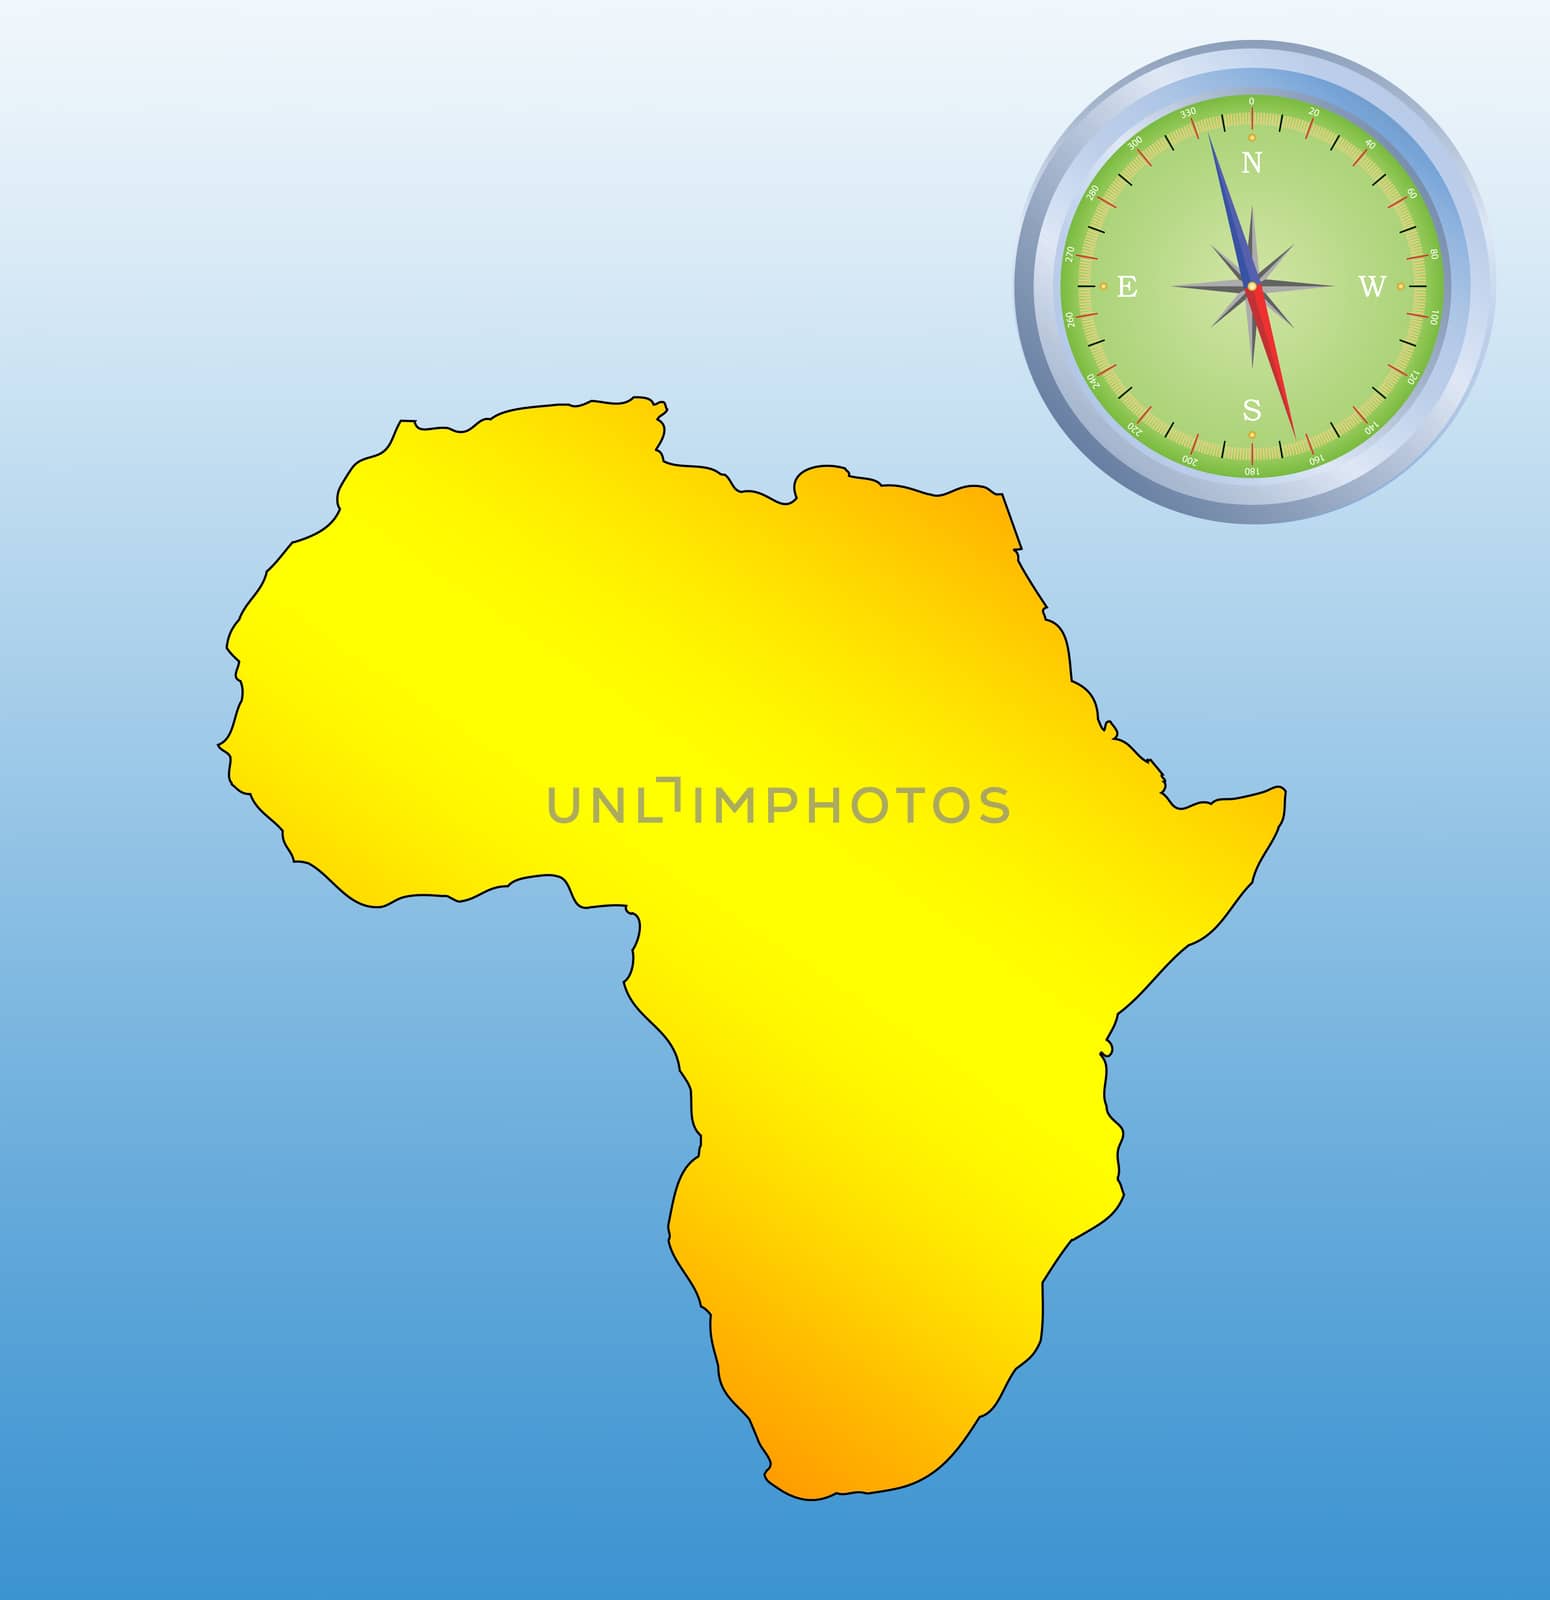 Africa background